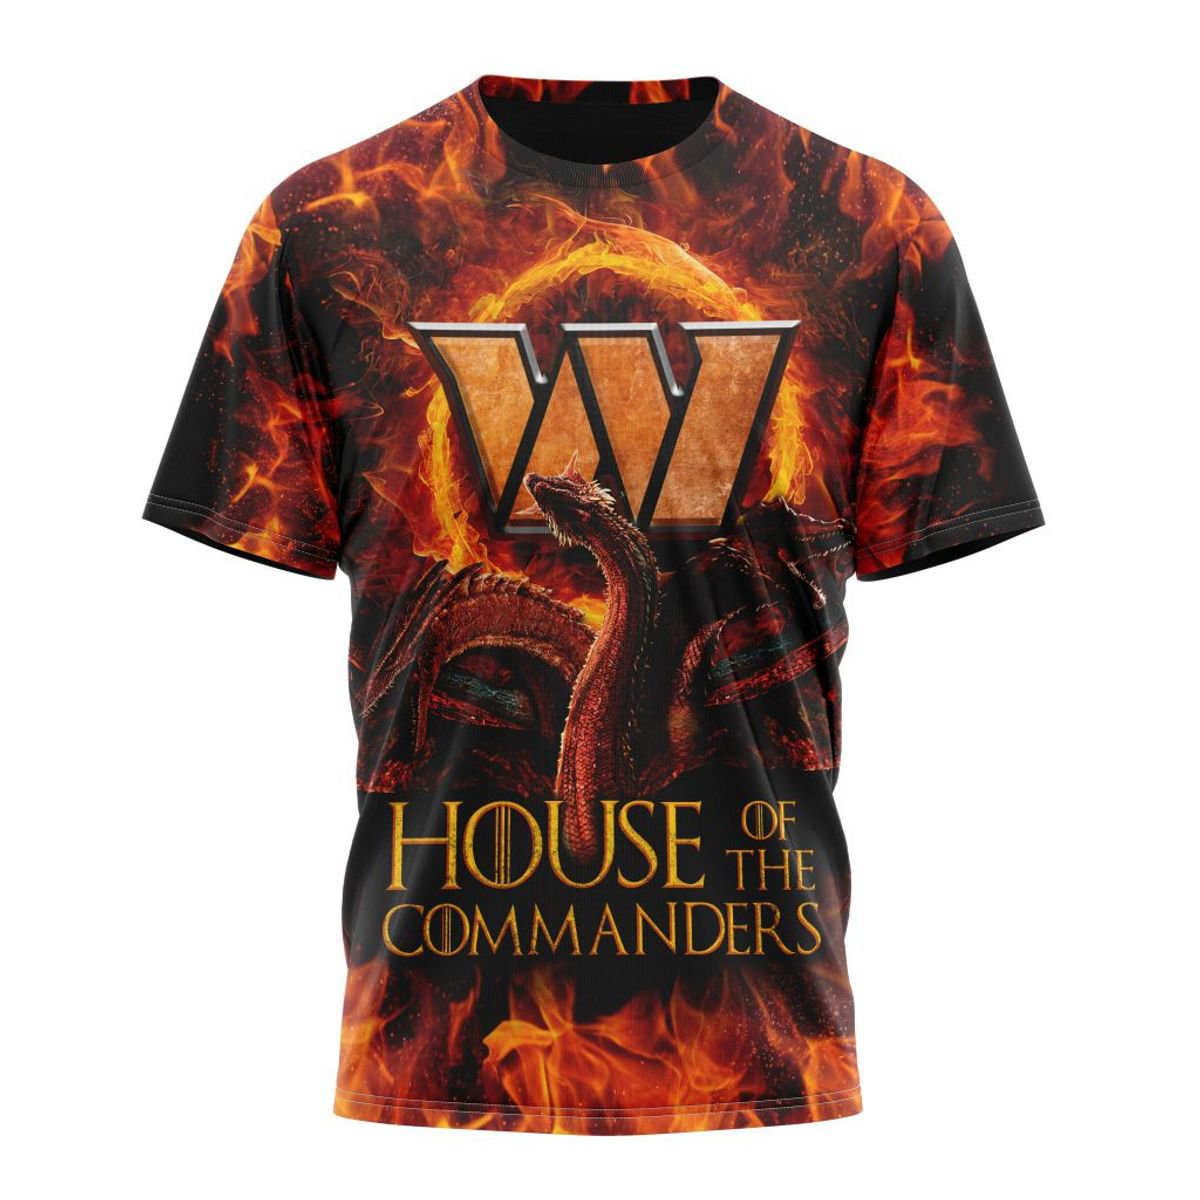 WASHINGTON COMMANDERS GAME OF THRONES – HOUSE OF THE COMMANDERS 3D HOODIE